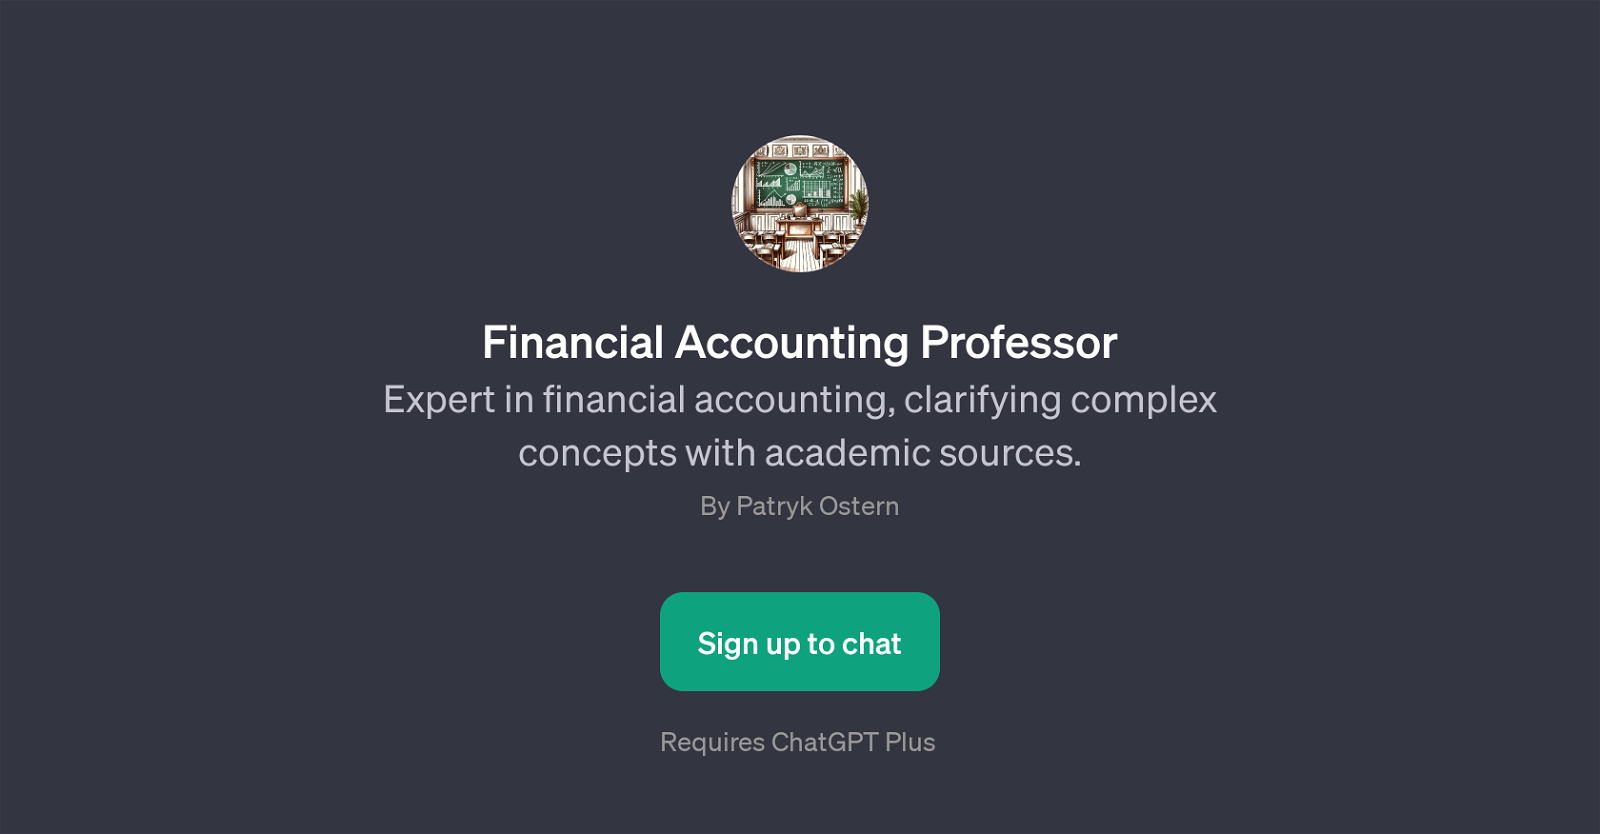 Financial Accounting Professor website